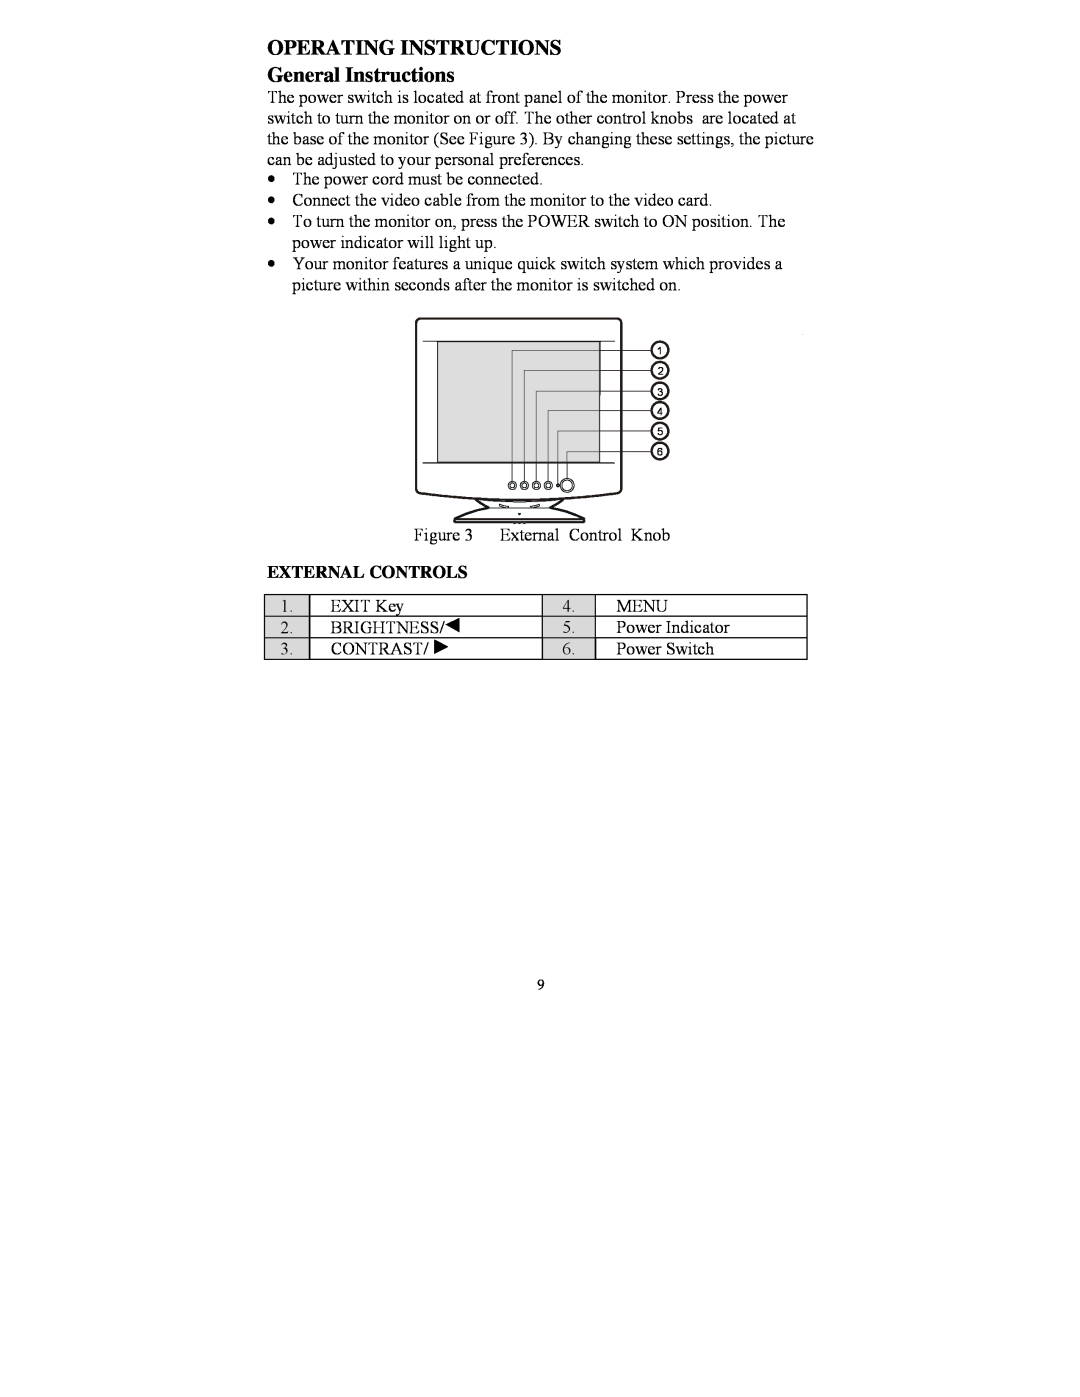 Lenovo E54 manual OPERATING INSTRUCTIONS General Instructions, External Controls 